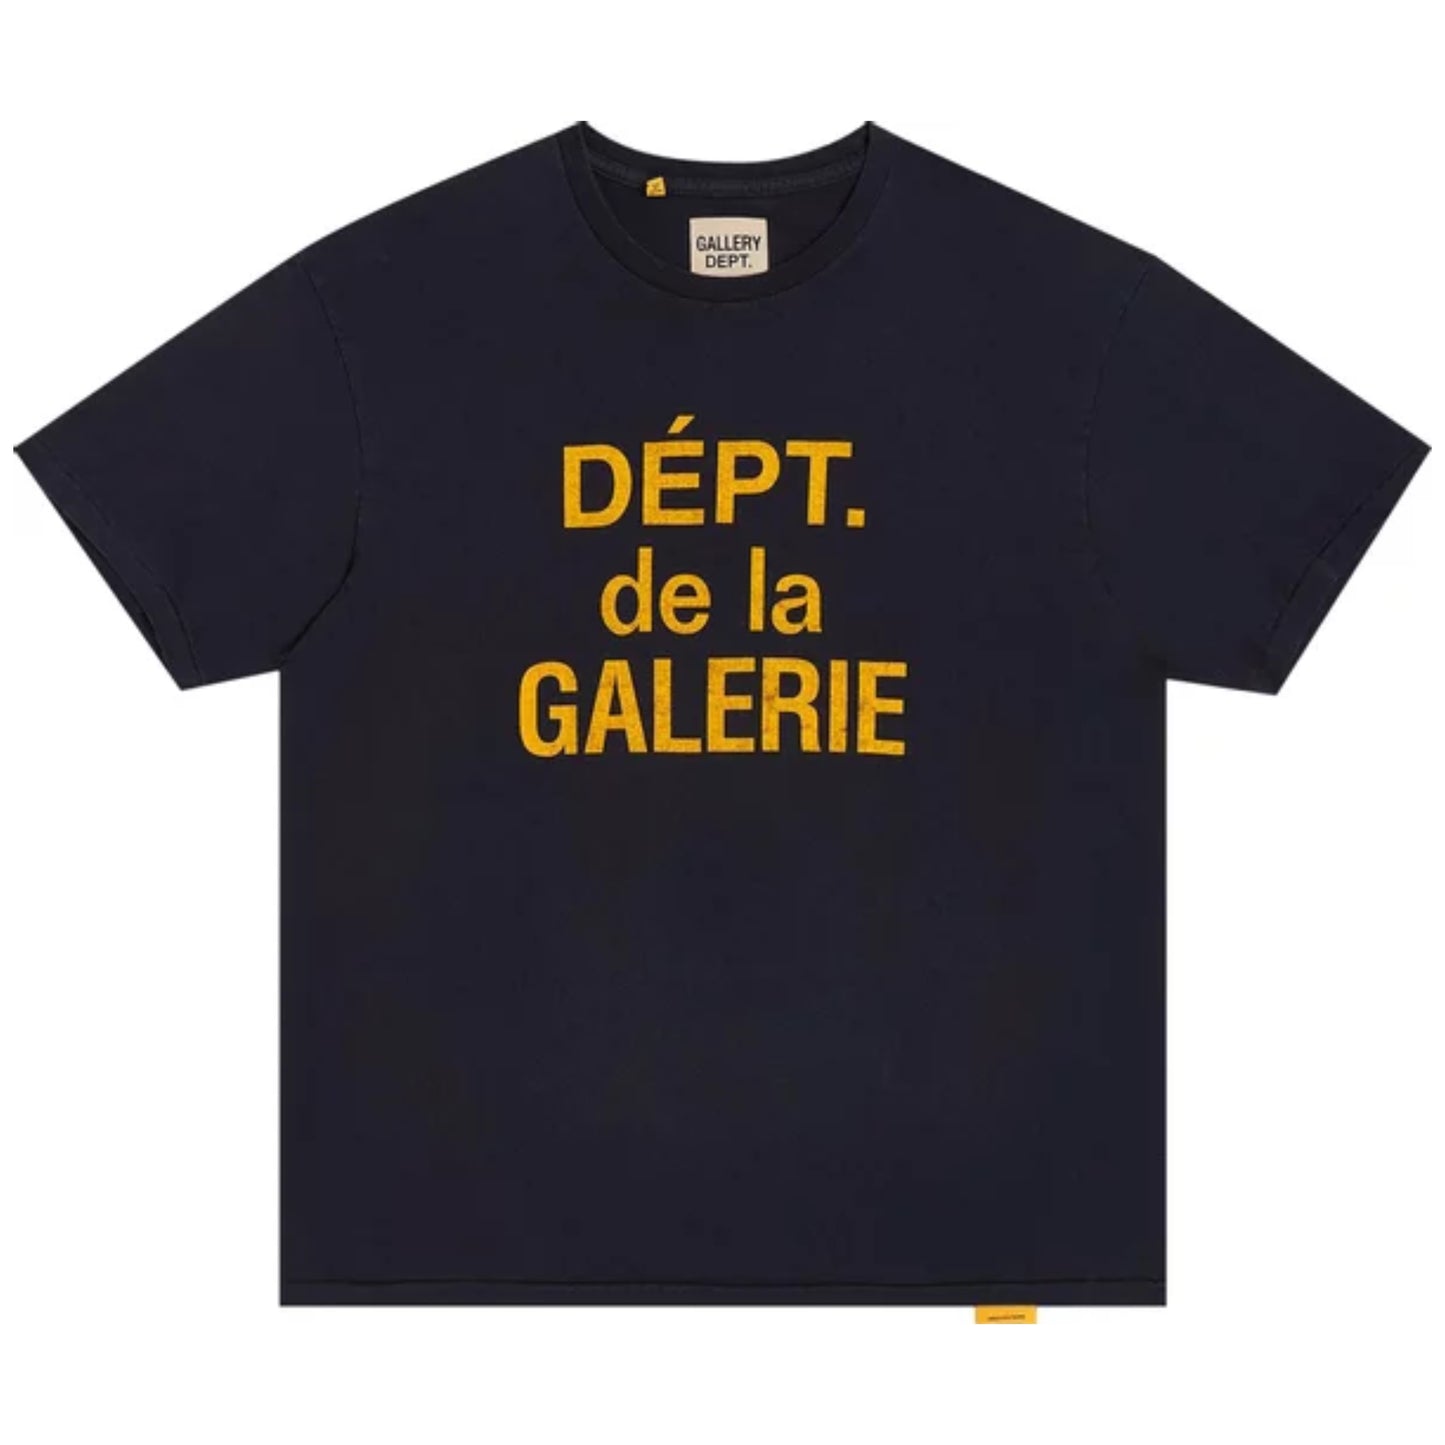 GALLERY DEPT DE LA TEE